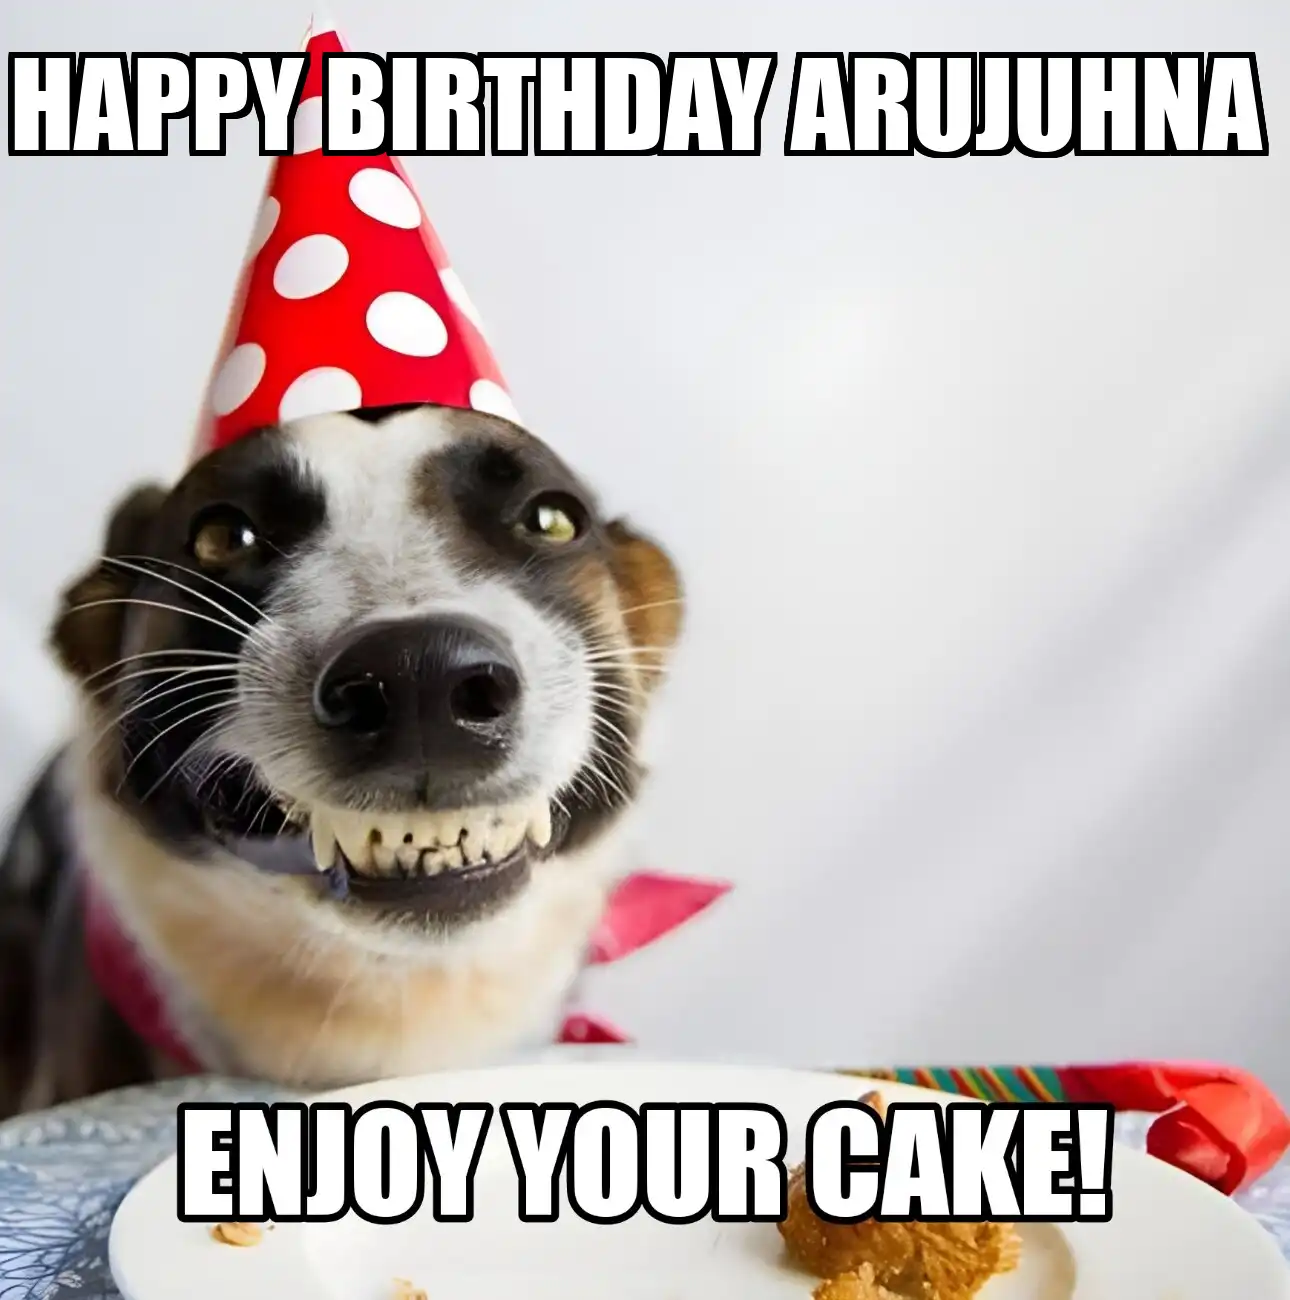 Happy Birthday Arujuhna Enjoy Your Cake Dog Meme